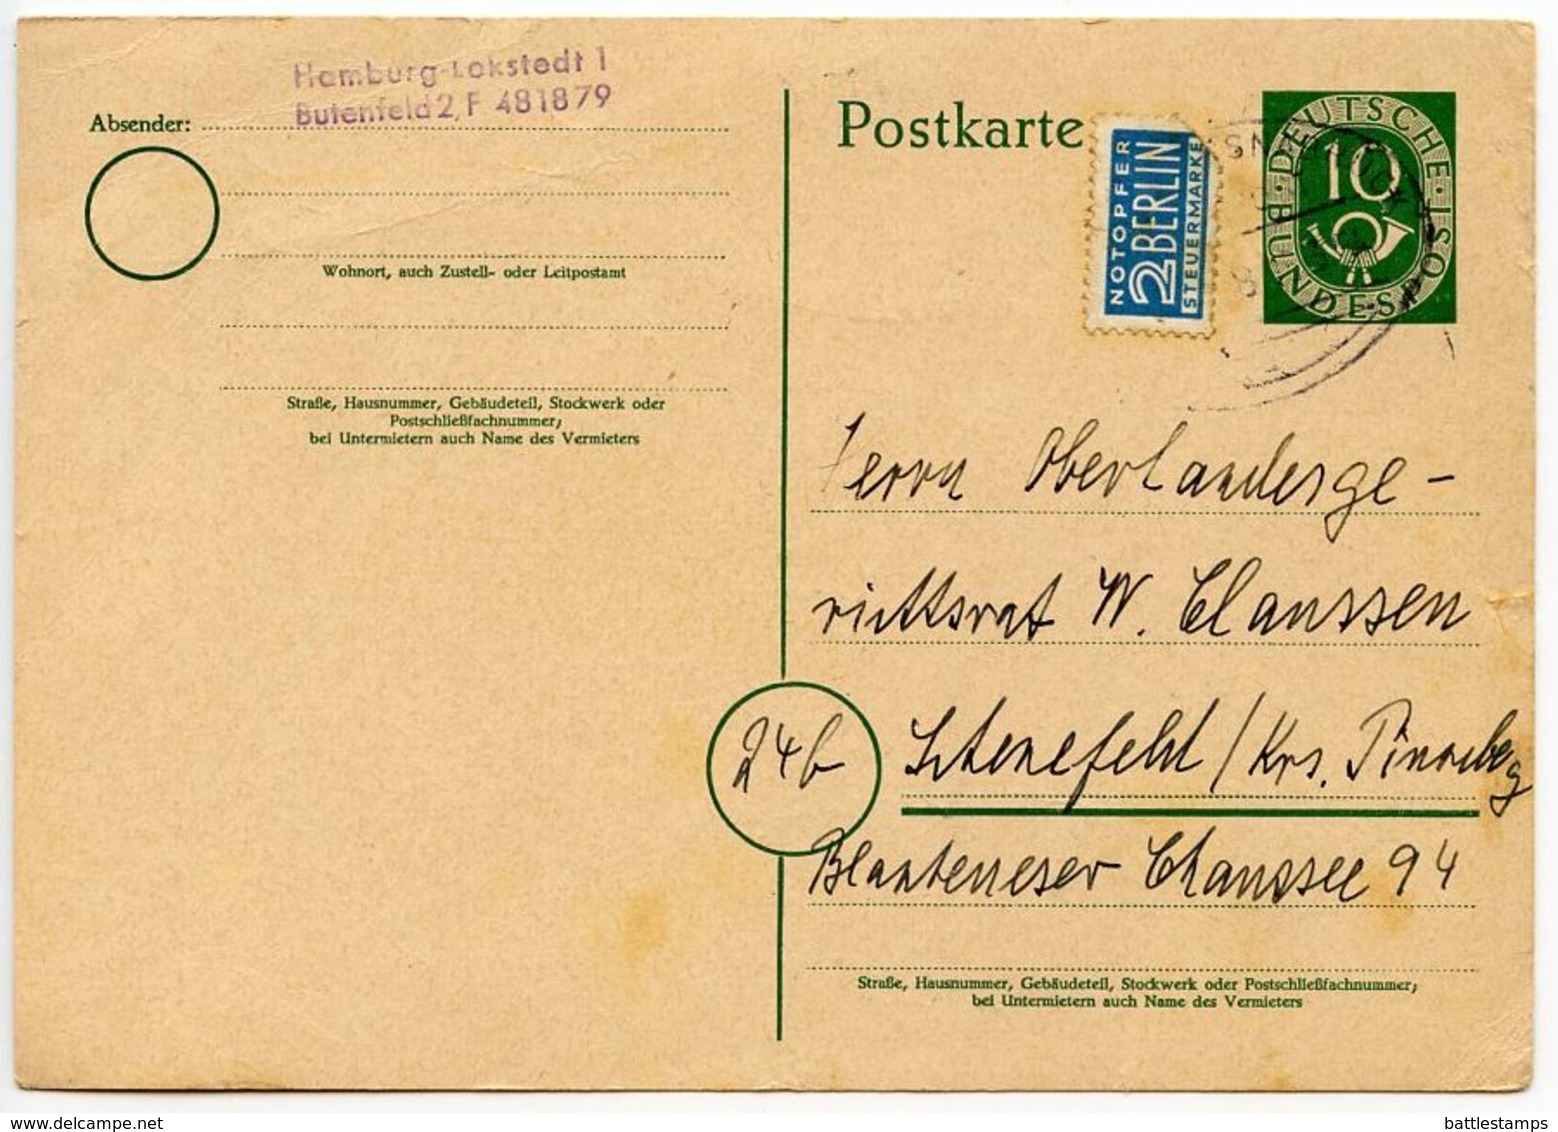 Germany, West 1954 10pf Posthorn Postal Card W/ Postal Tax Stamp - Postcards - Used